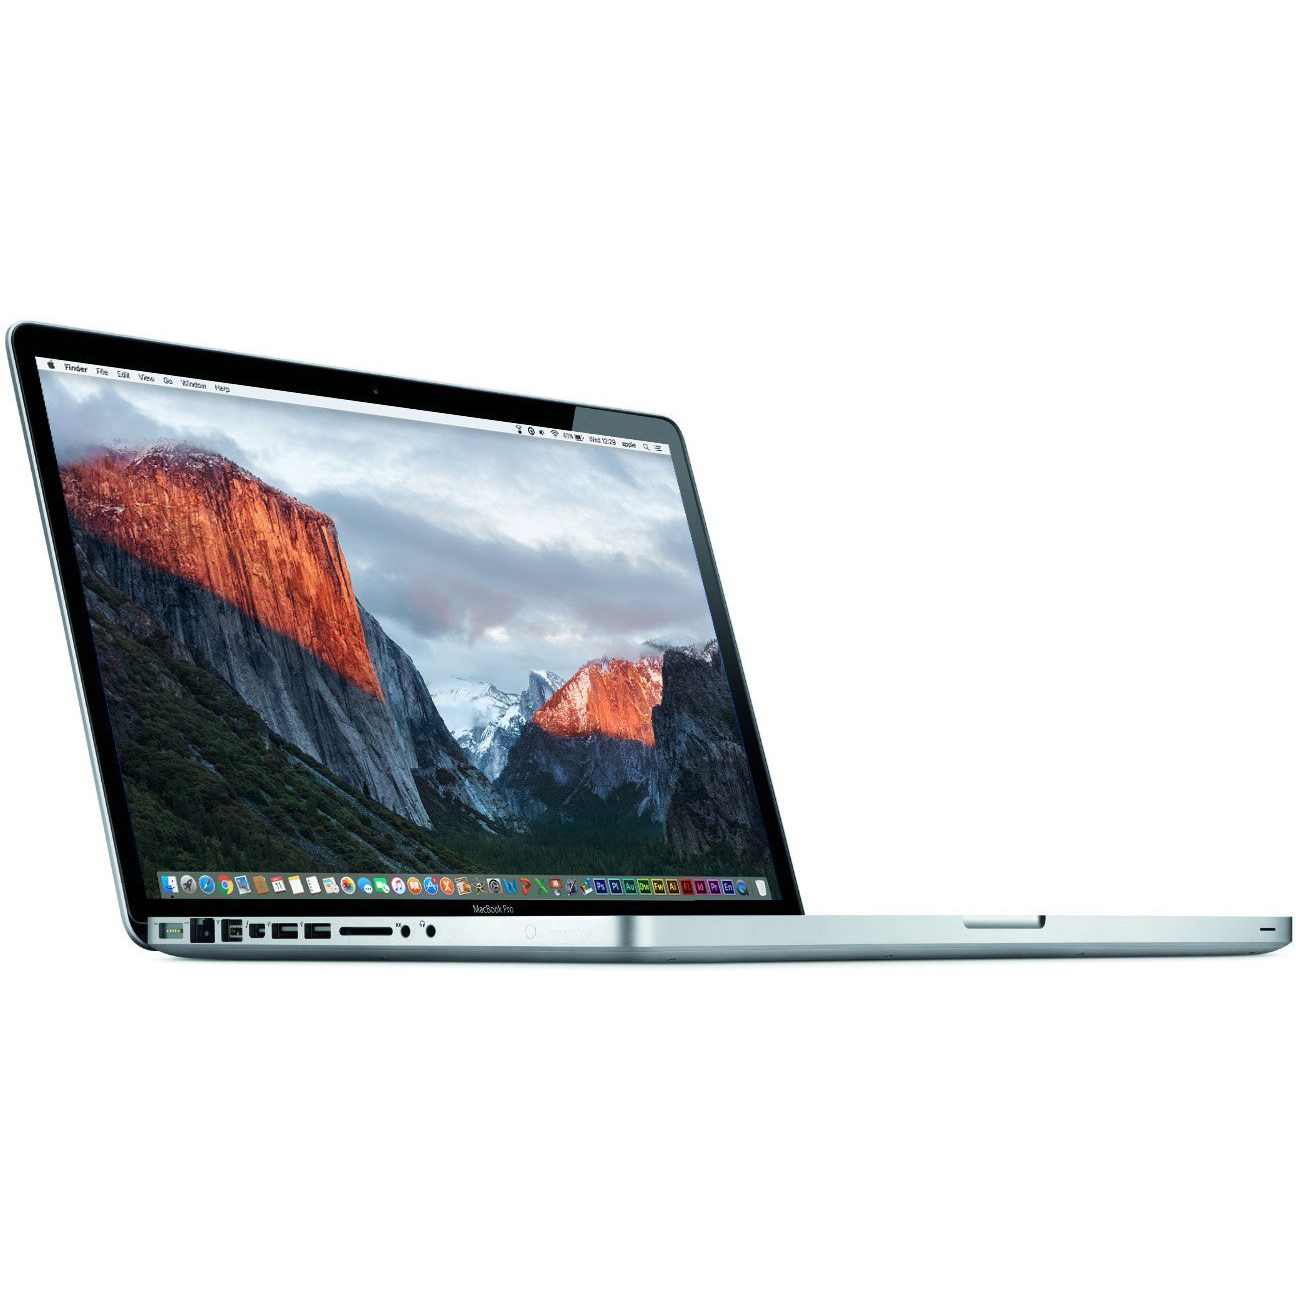 Restored Apple MacBook Pro 15.4" Laptop Intel i7 Quad Core 2.3GHz 4GB 500GB - MD103LL/A (Refurbished) - image 2 of 2